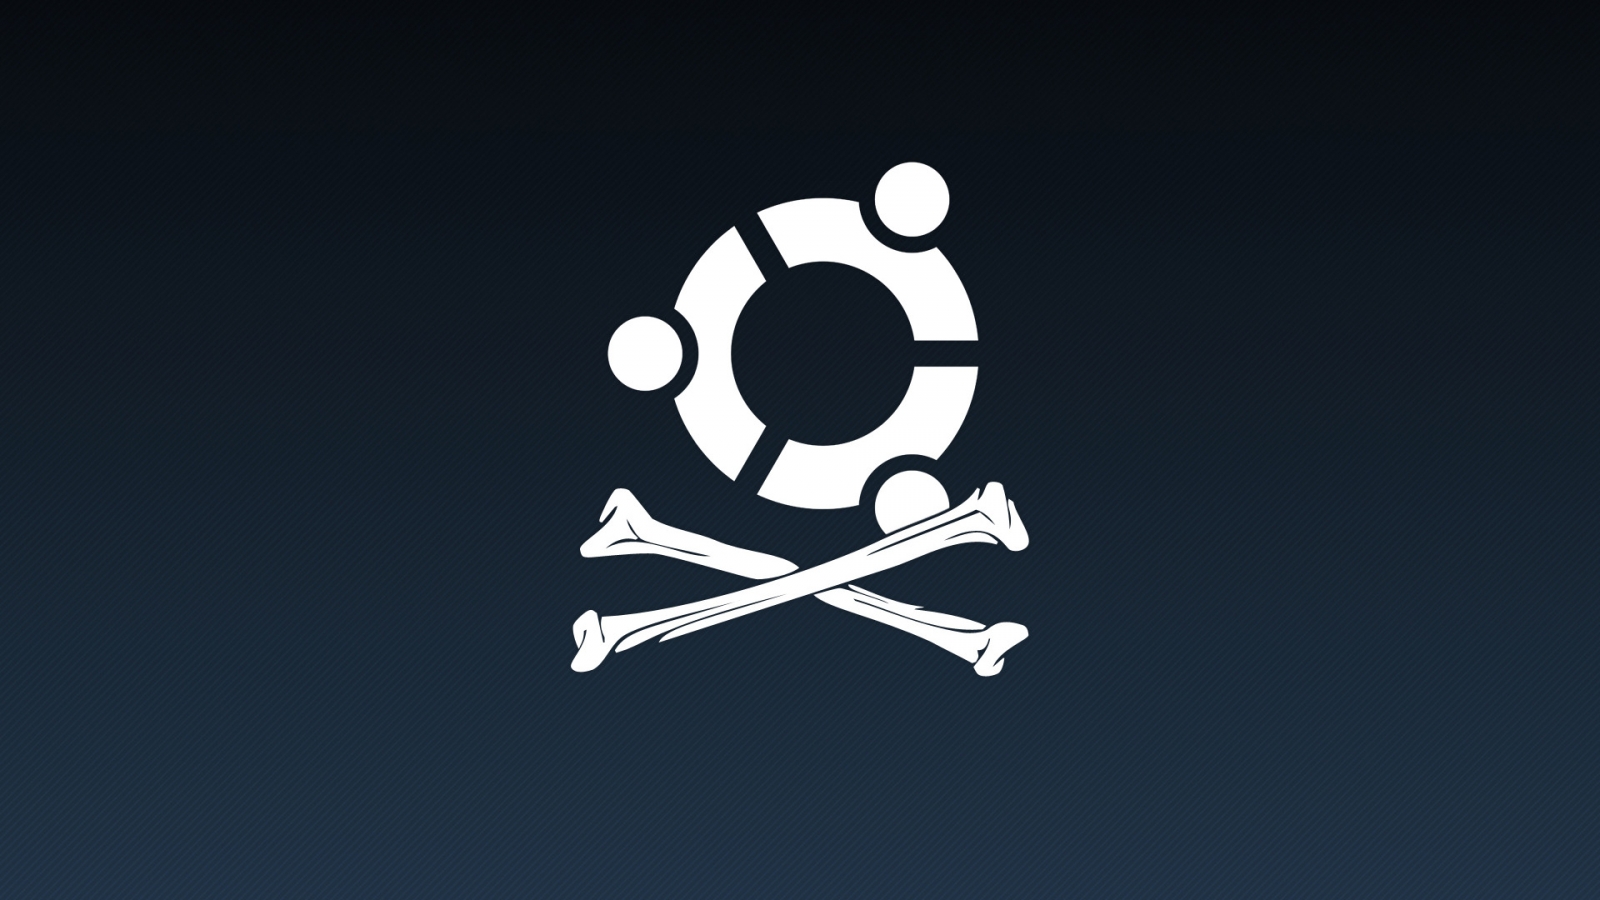 Pirate Ubuntu for 1600 x 900 HDTV resolution